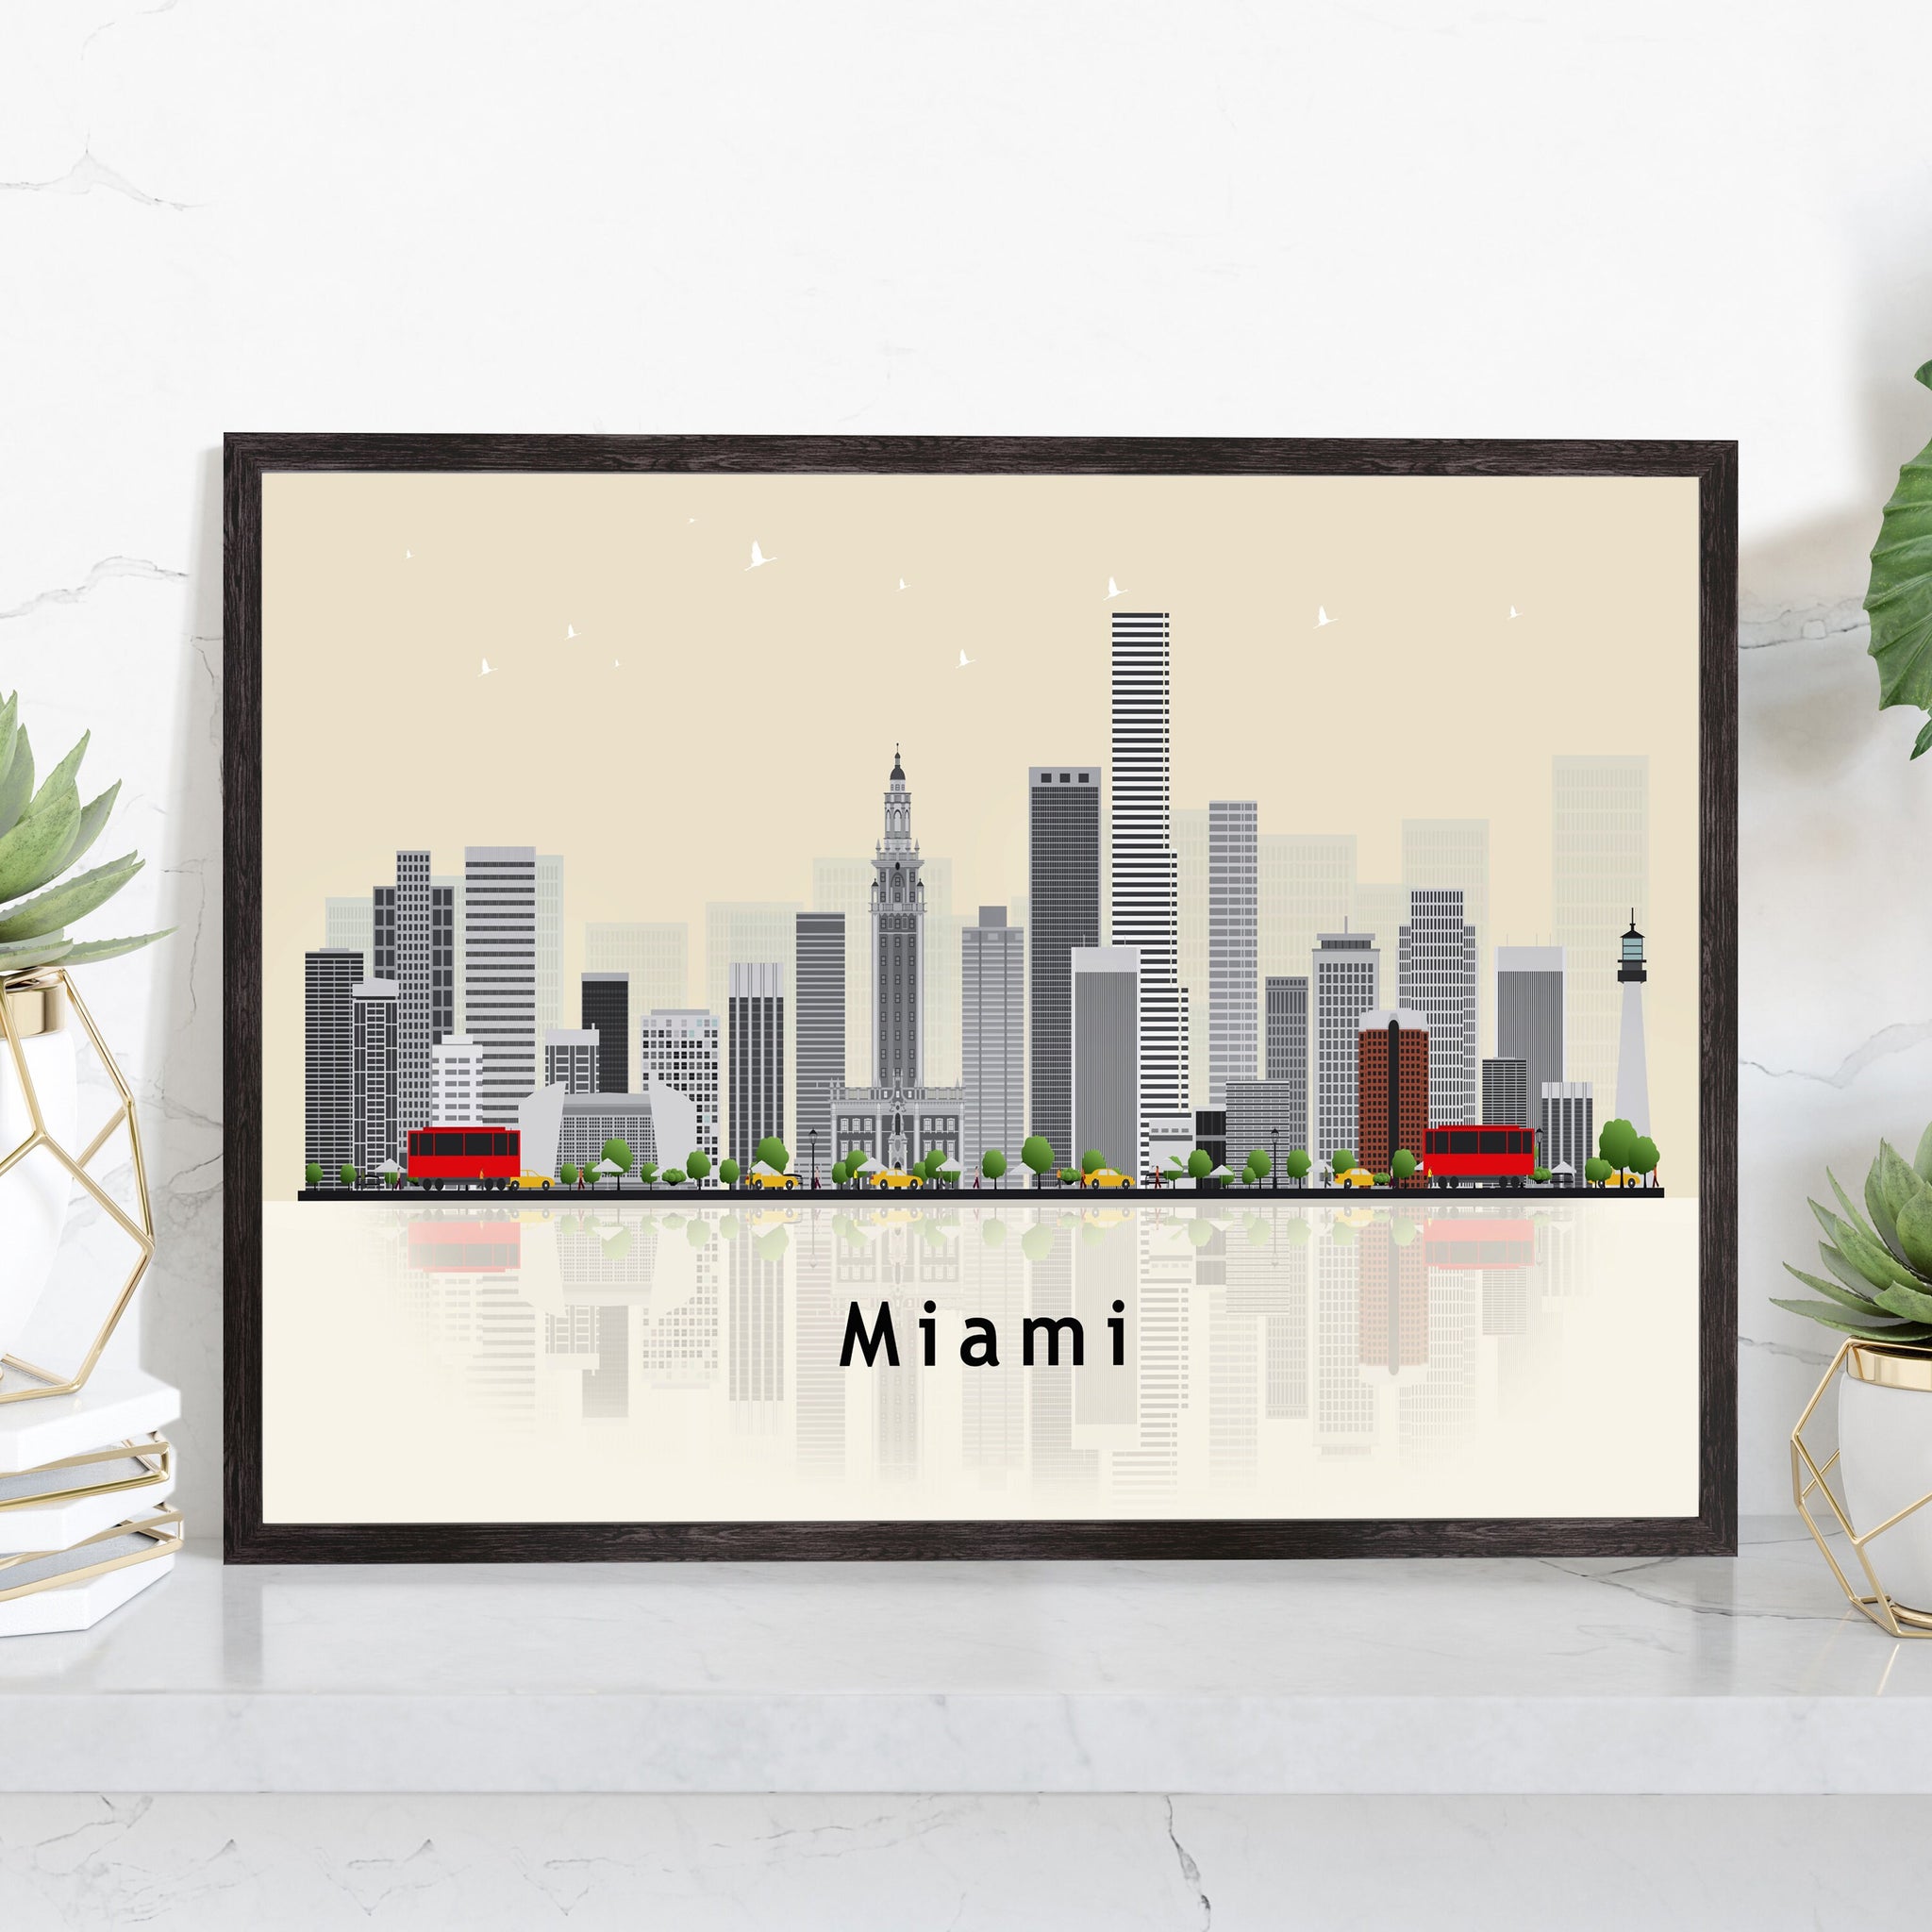 MIAMI FLORIDA Illustration skyline poster, Florida state modern skyline cityscape poster print, Landmark home wall art decoration poster